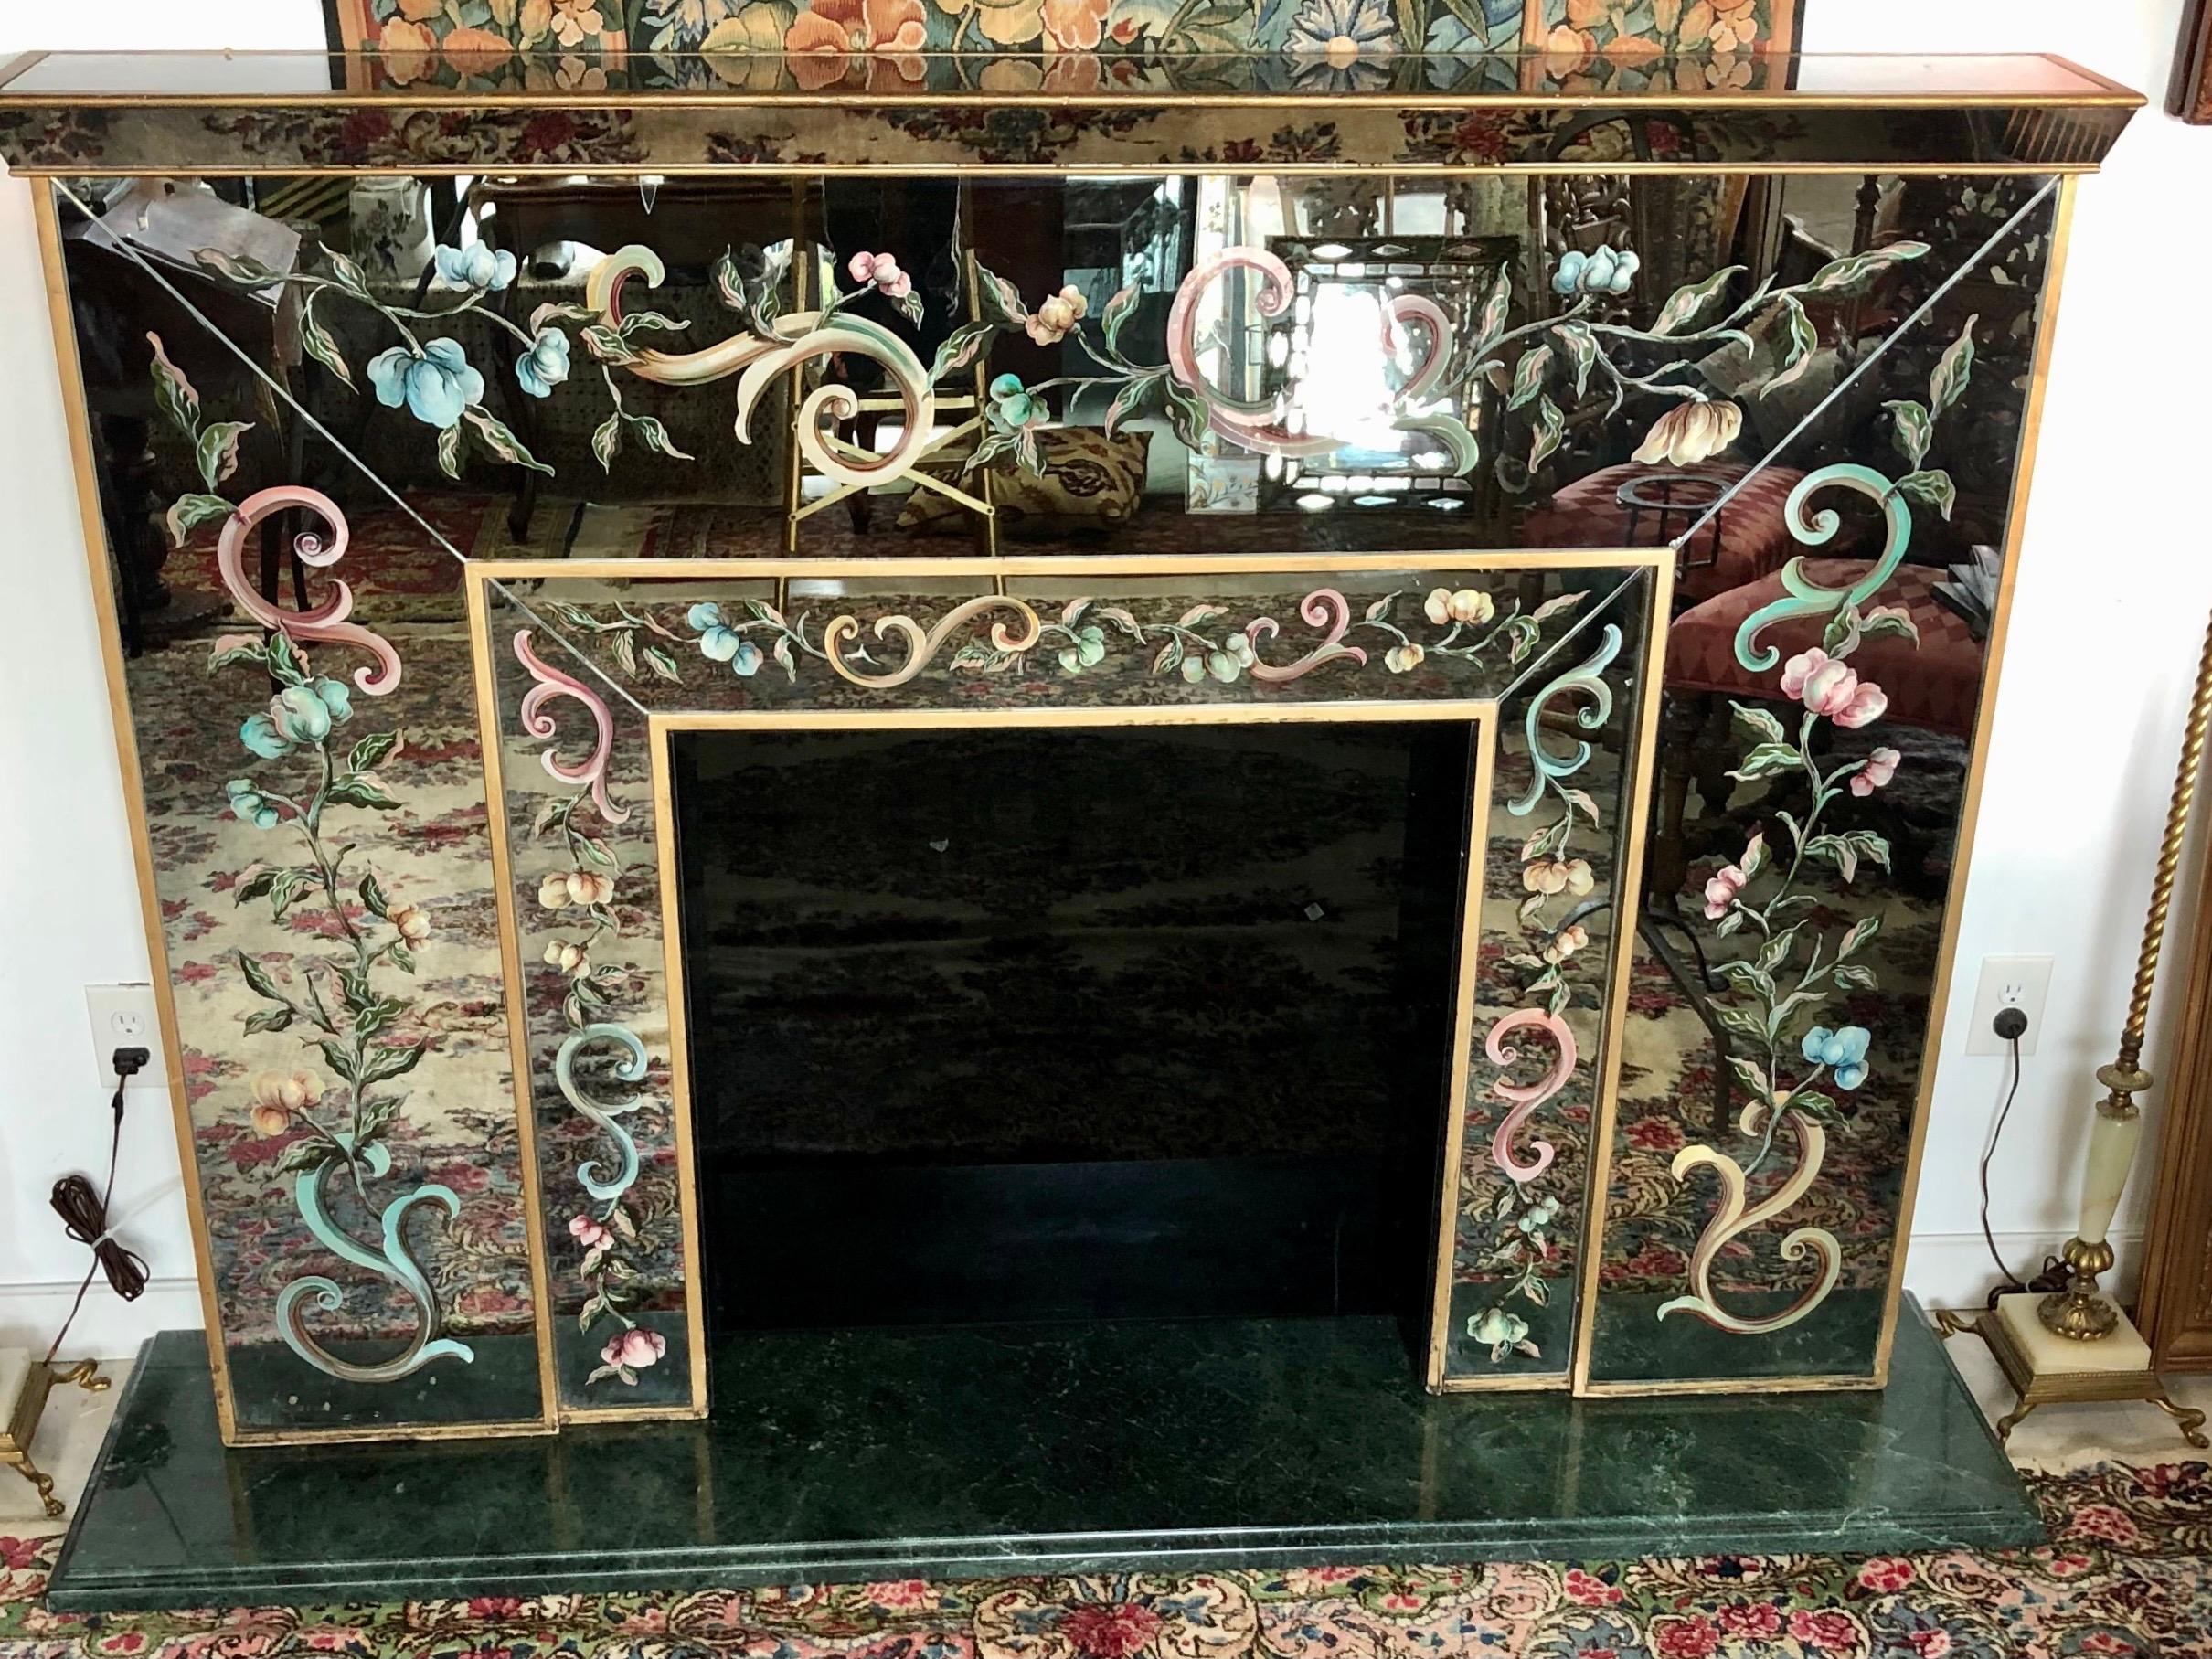 mirrored fireplace surround